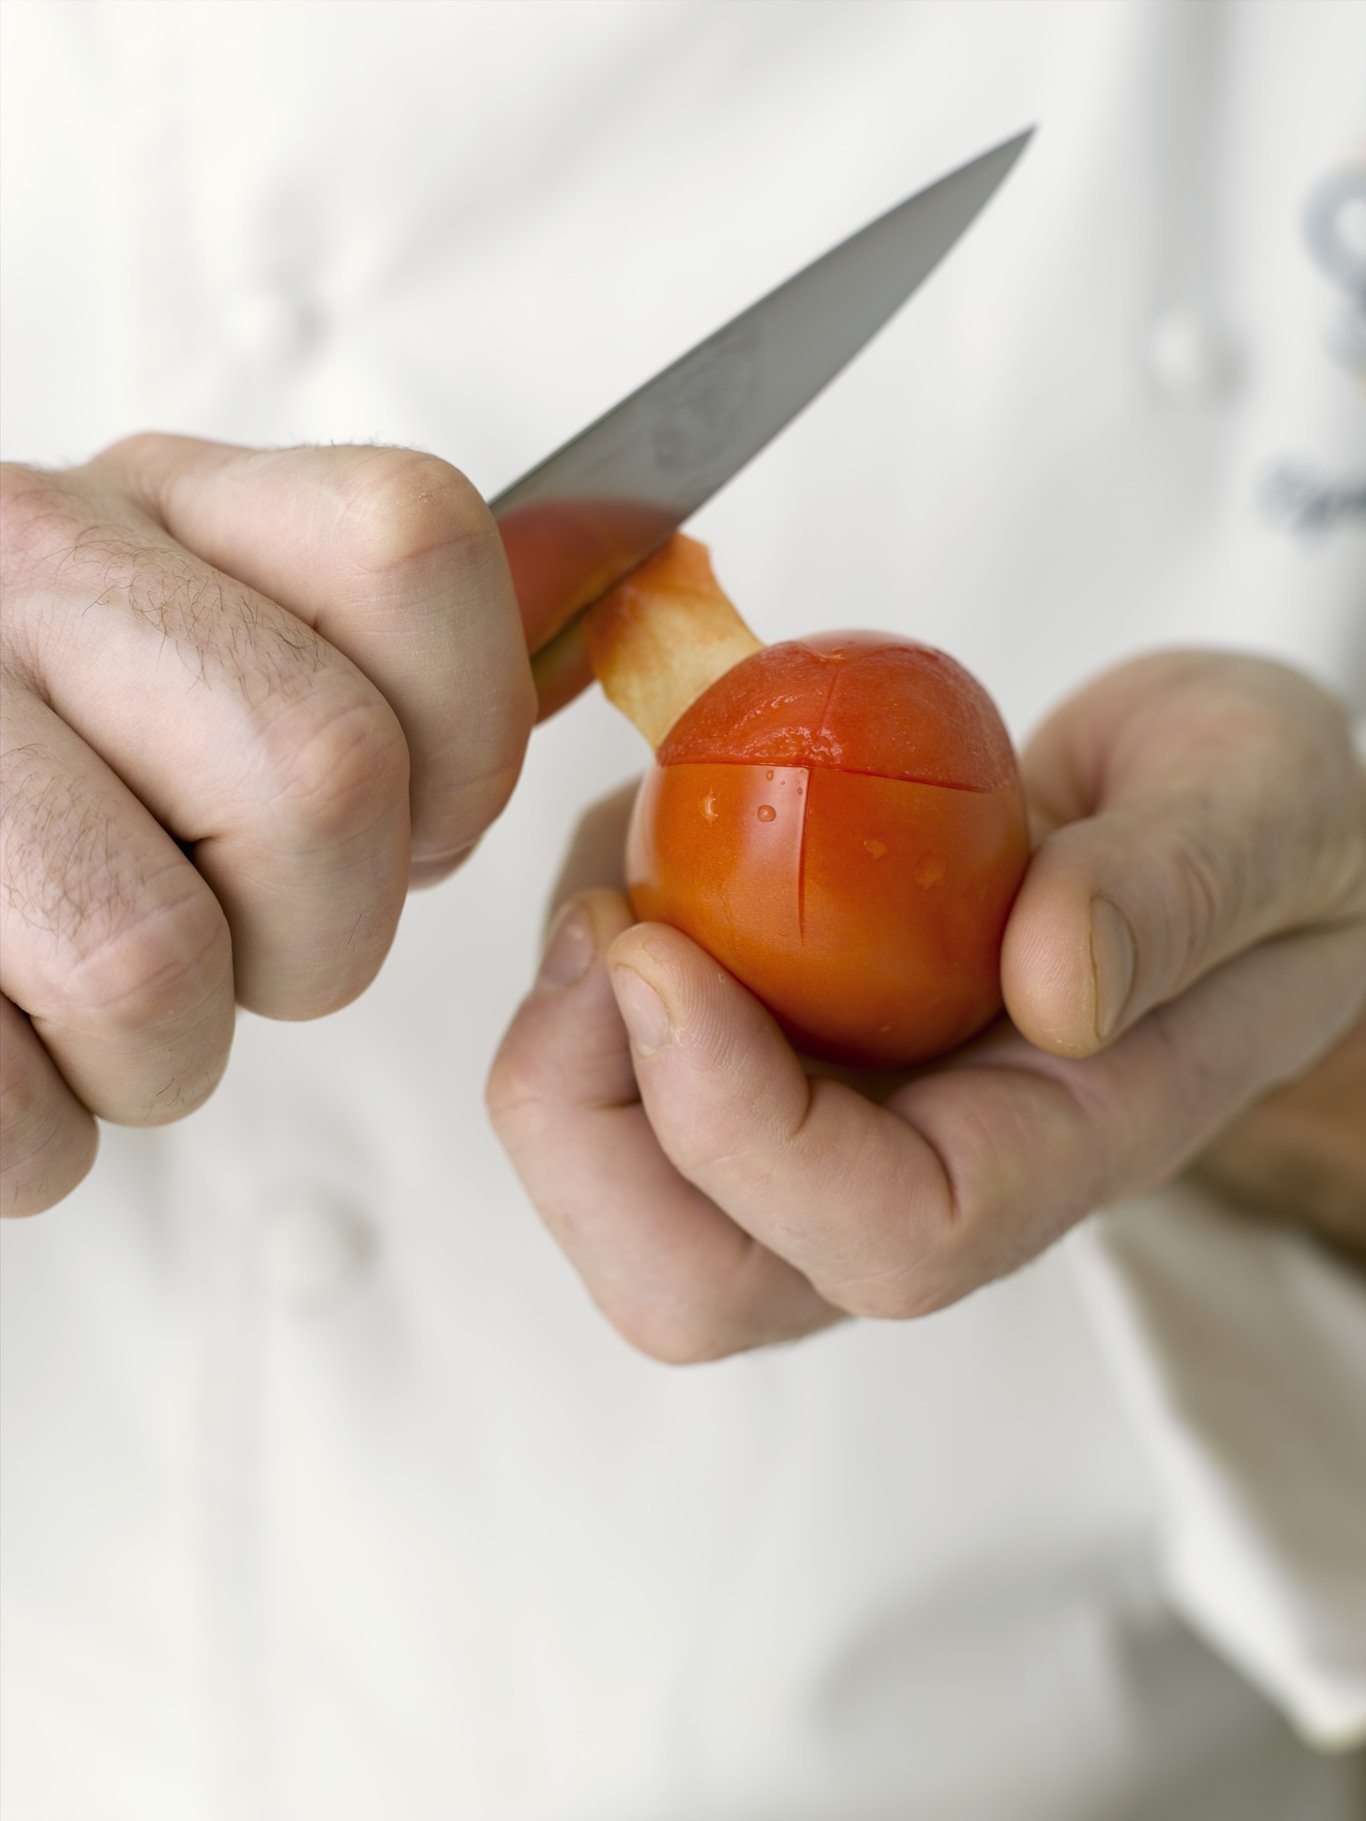 Peel away the skin of the tomato.